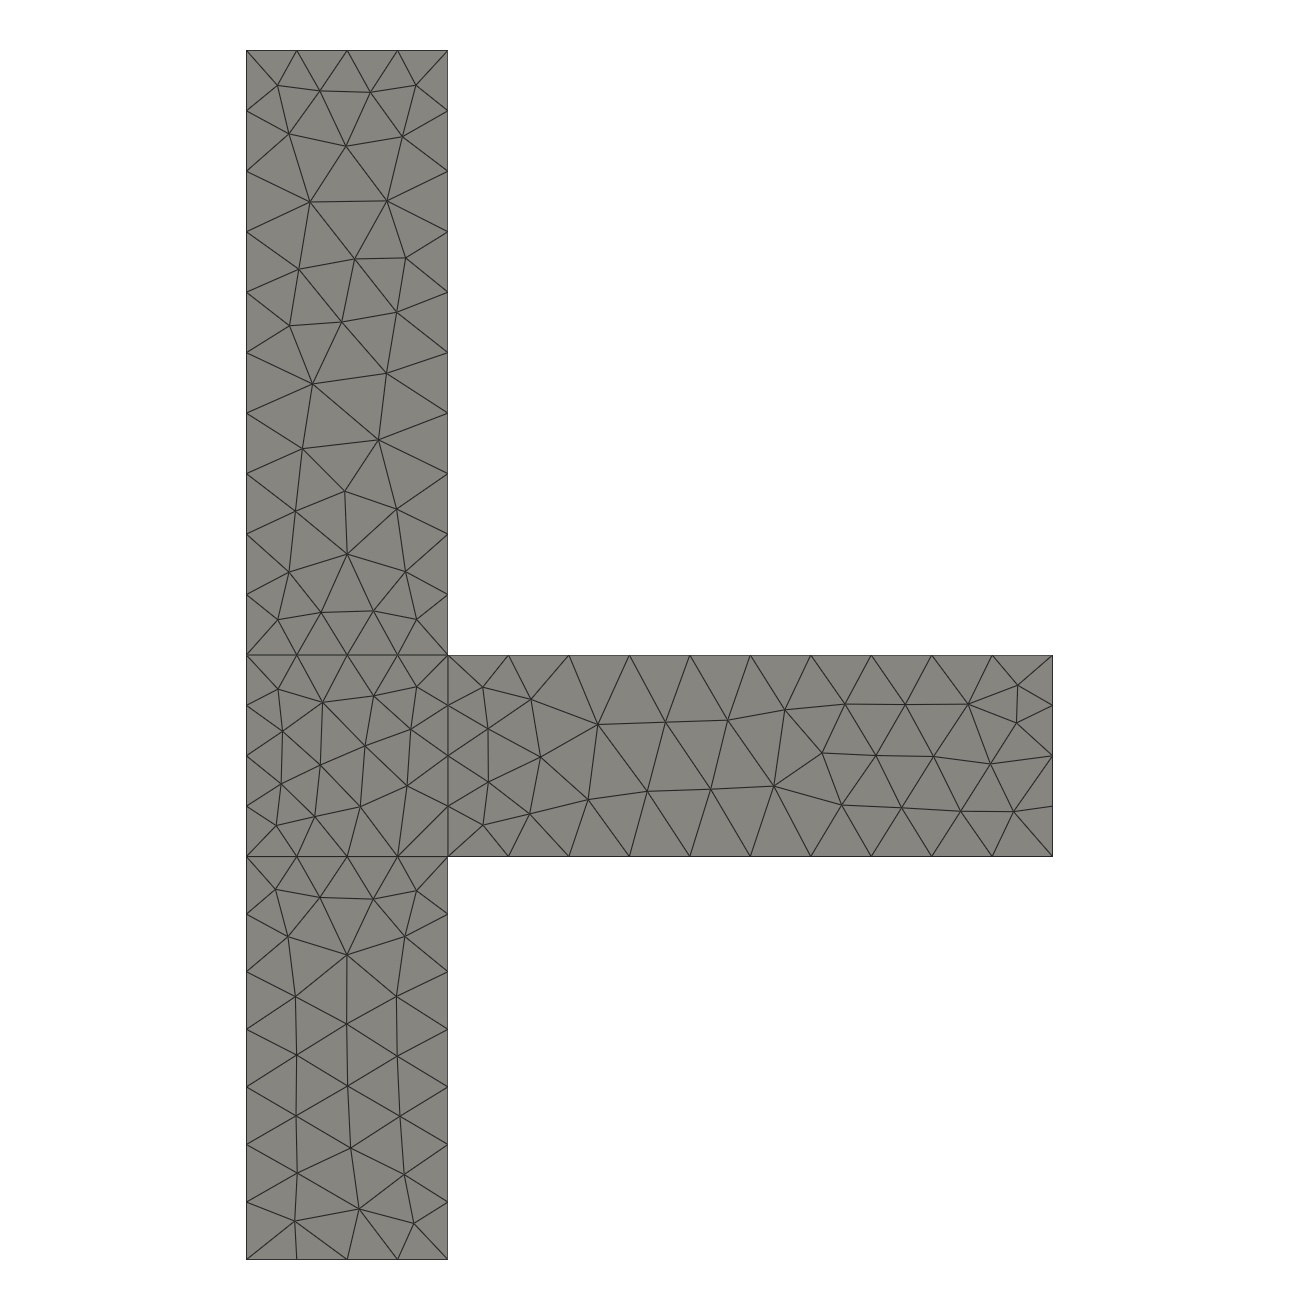 Image: Unstructured mesh coarse mesh density